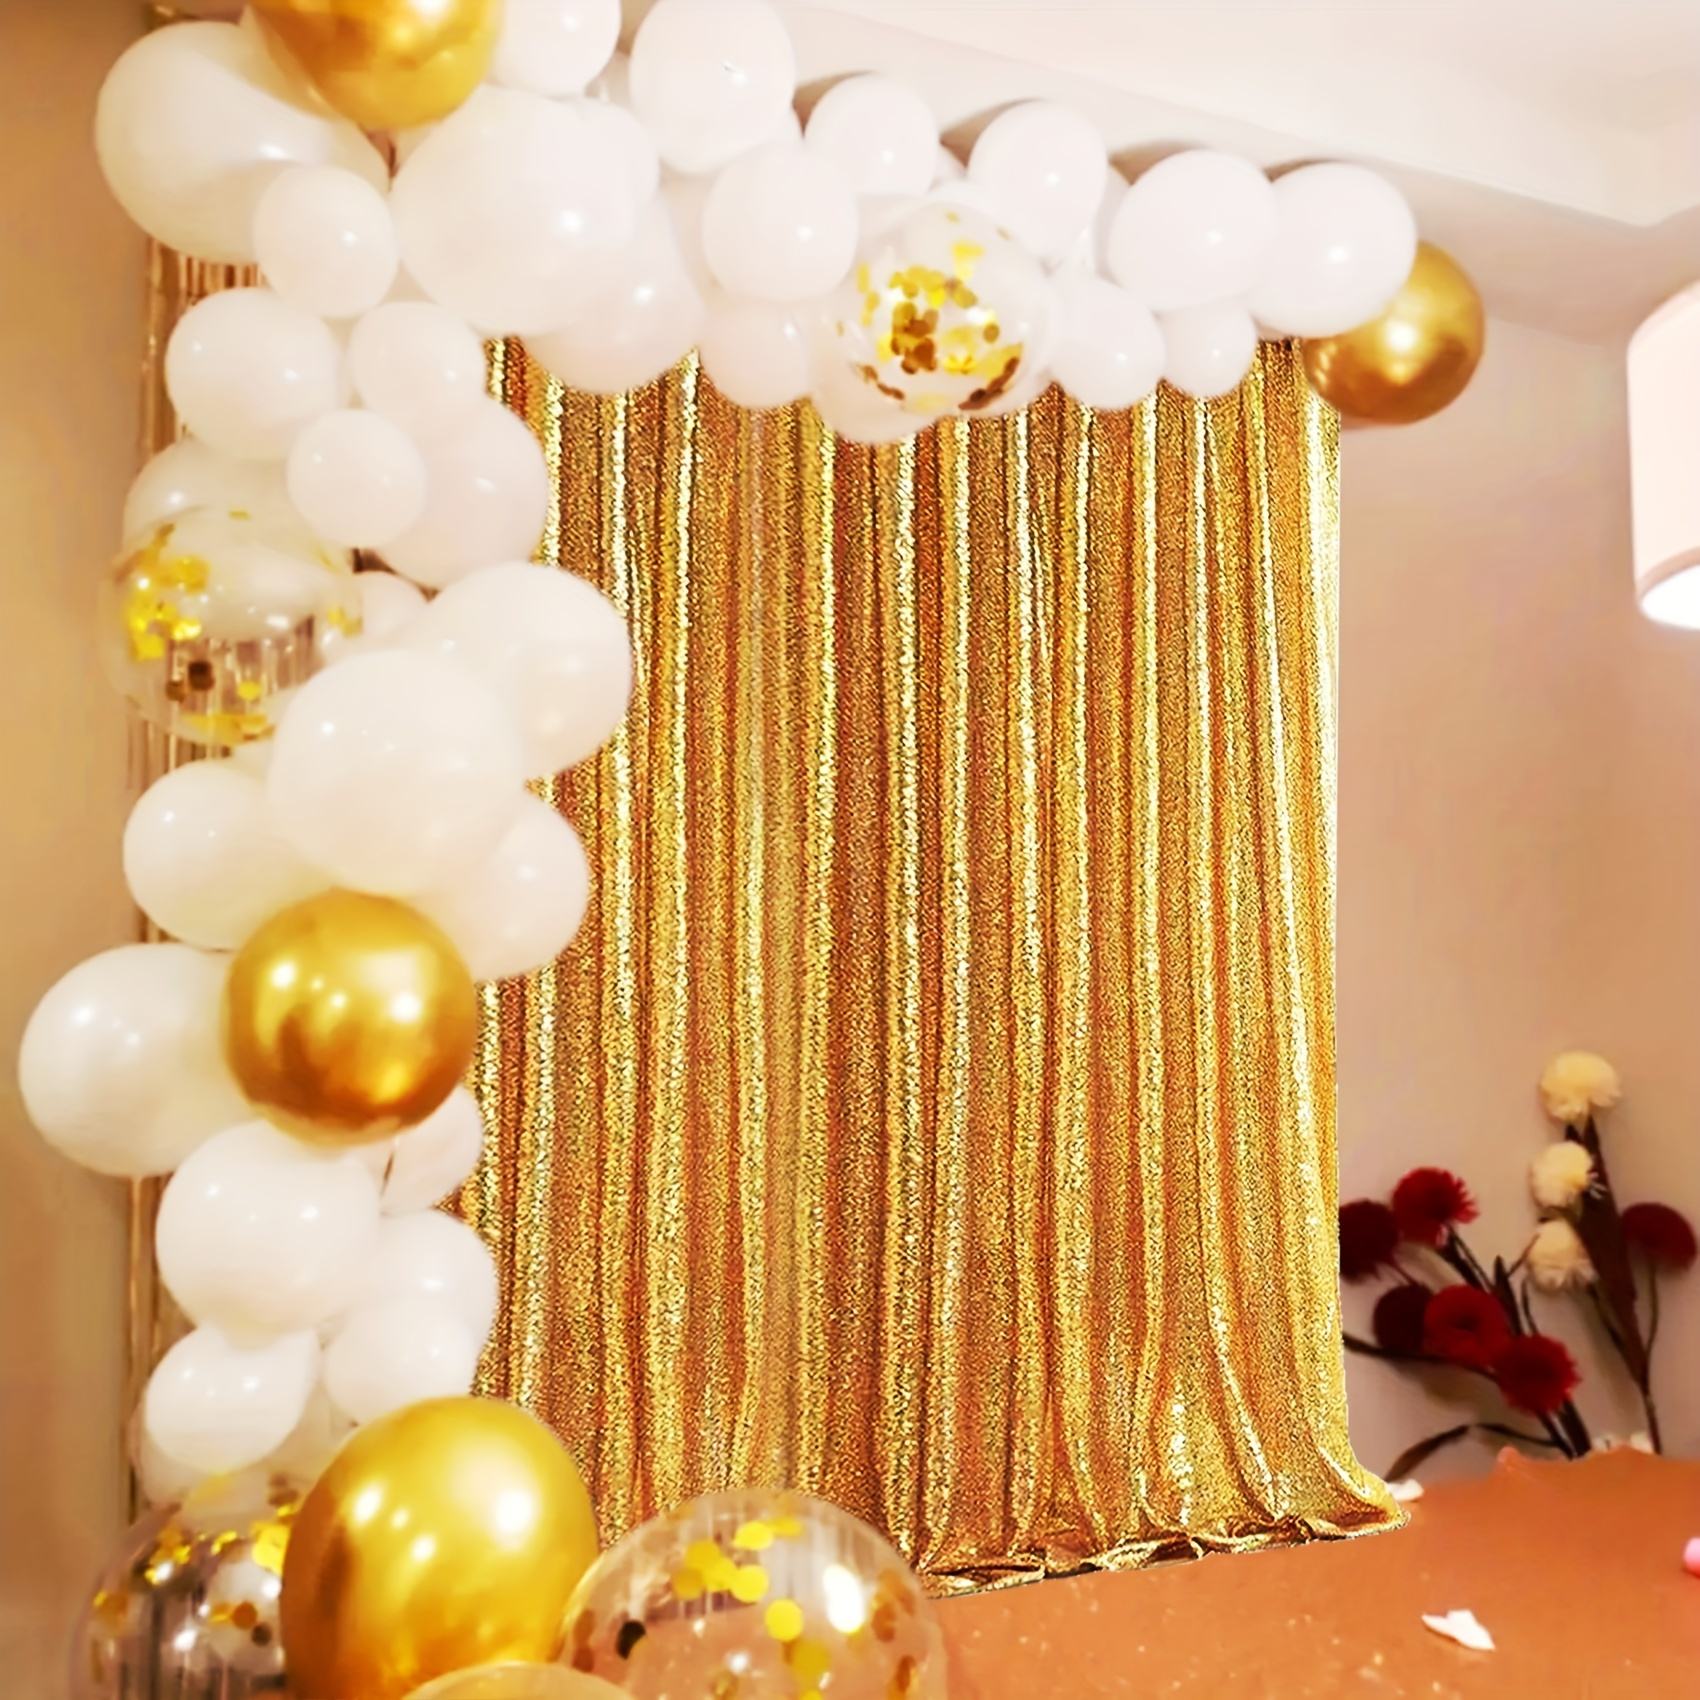 

Sparkling Sequin Backdrop Curtains 2ftx8ft - Ideal For Weddings, Celebrations & Events | Sturdy Polyester Blend, Simple Setup Elegant Drapes